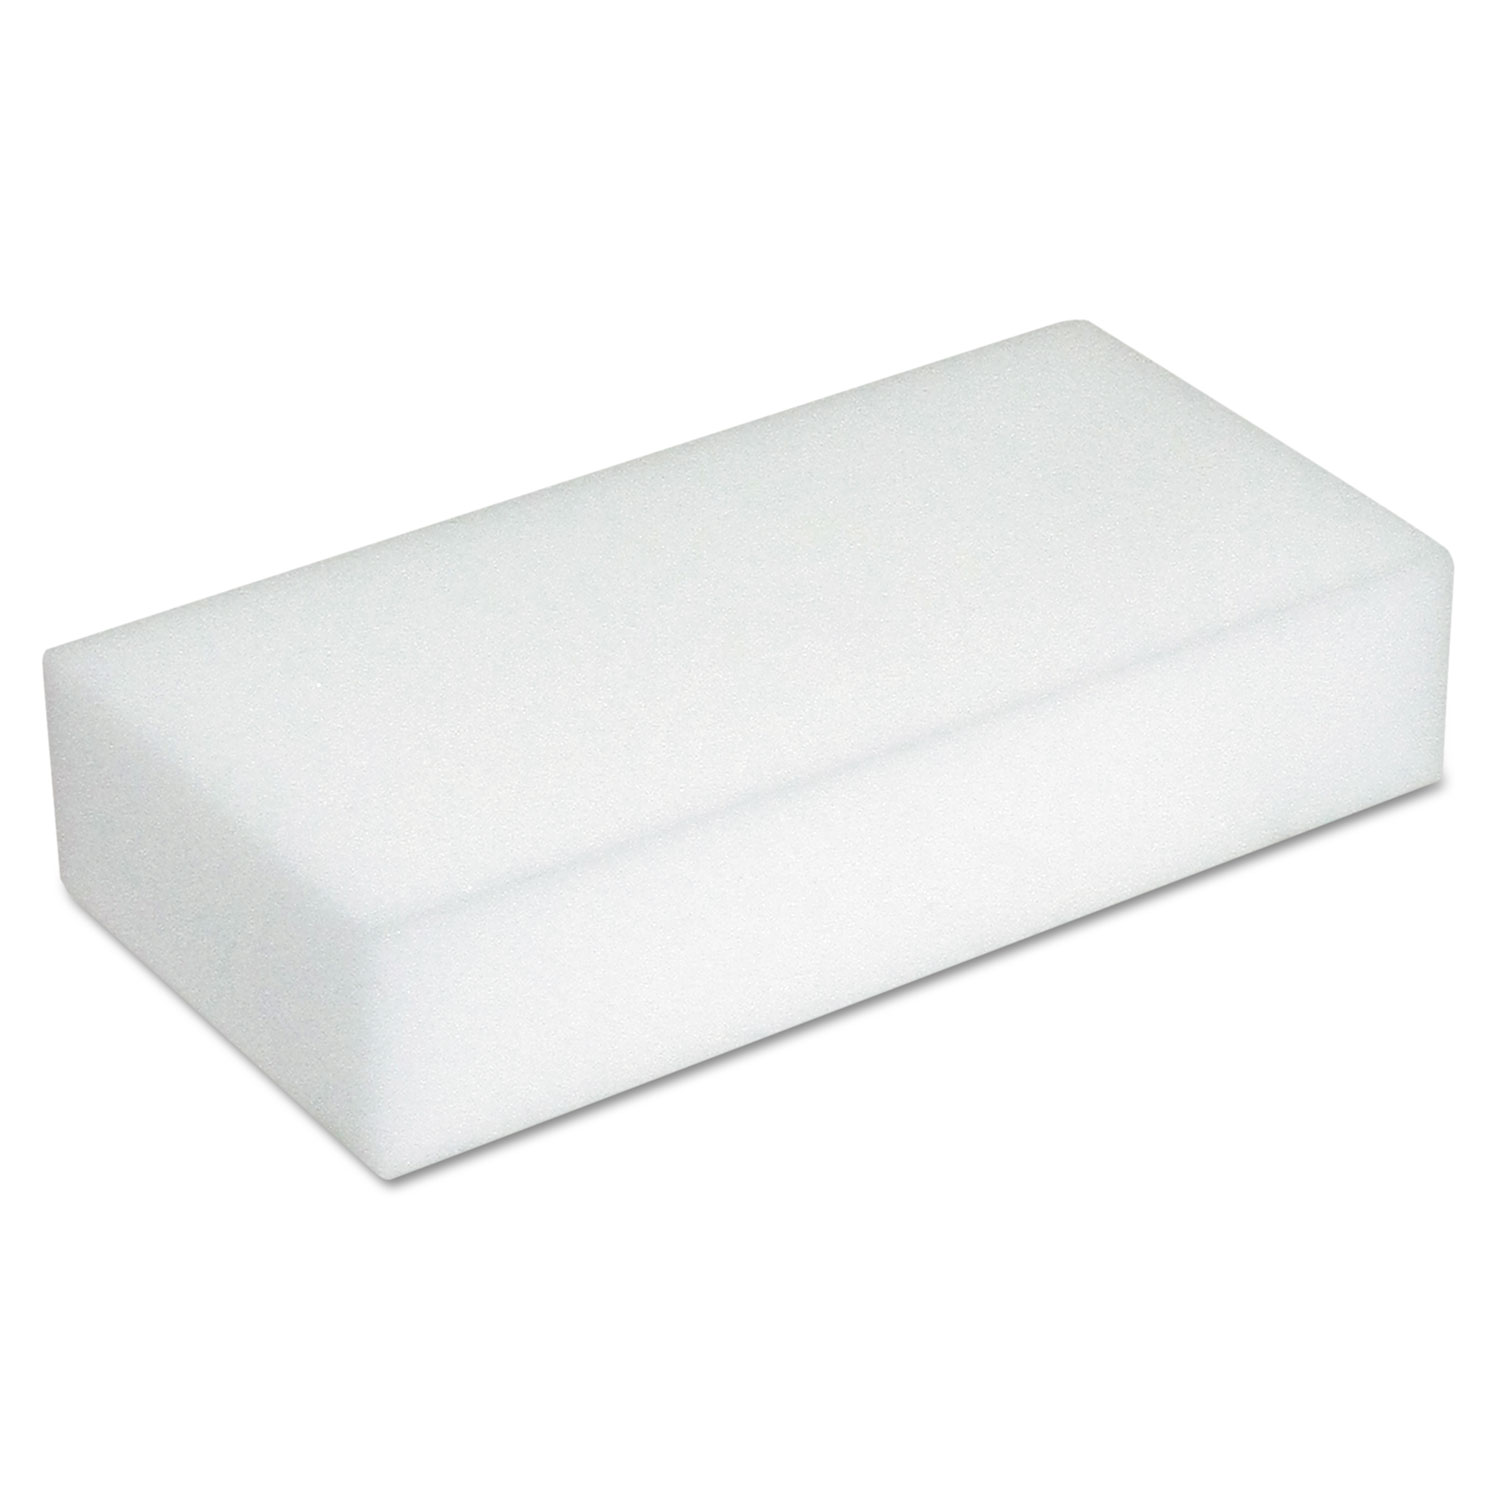  Boardwalk 600100 Disposable Eraser Pads, White, Foam, 2 2/5 x 4 3/5, 100/Carton (BWK600100) 